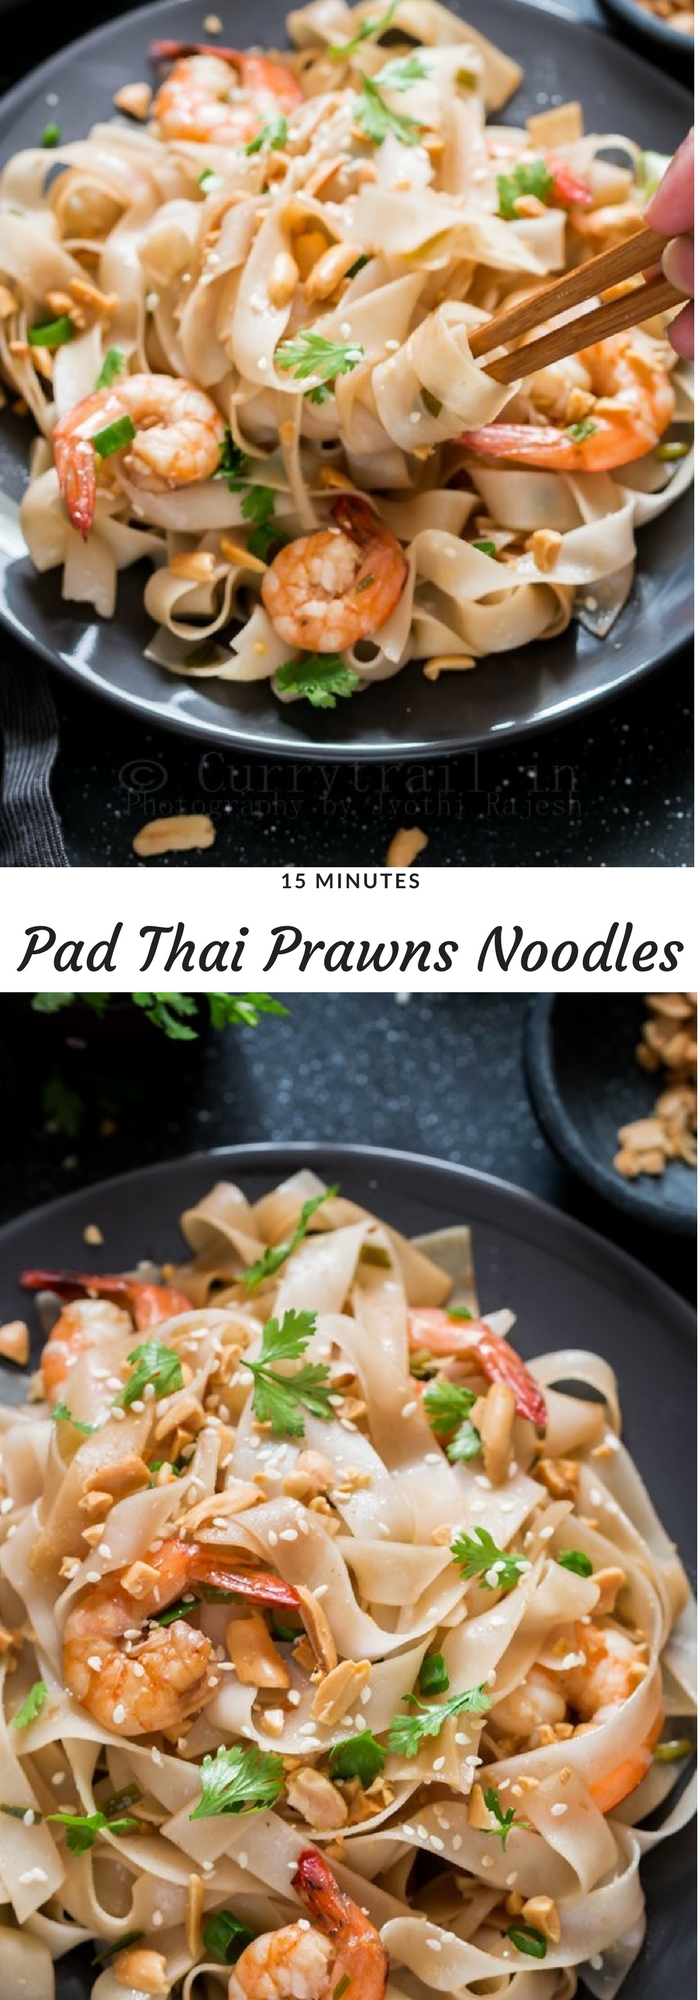 Pad Thai Prawns Noodles